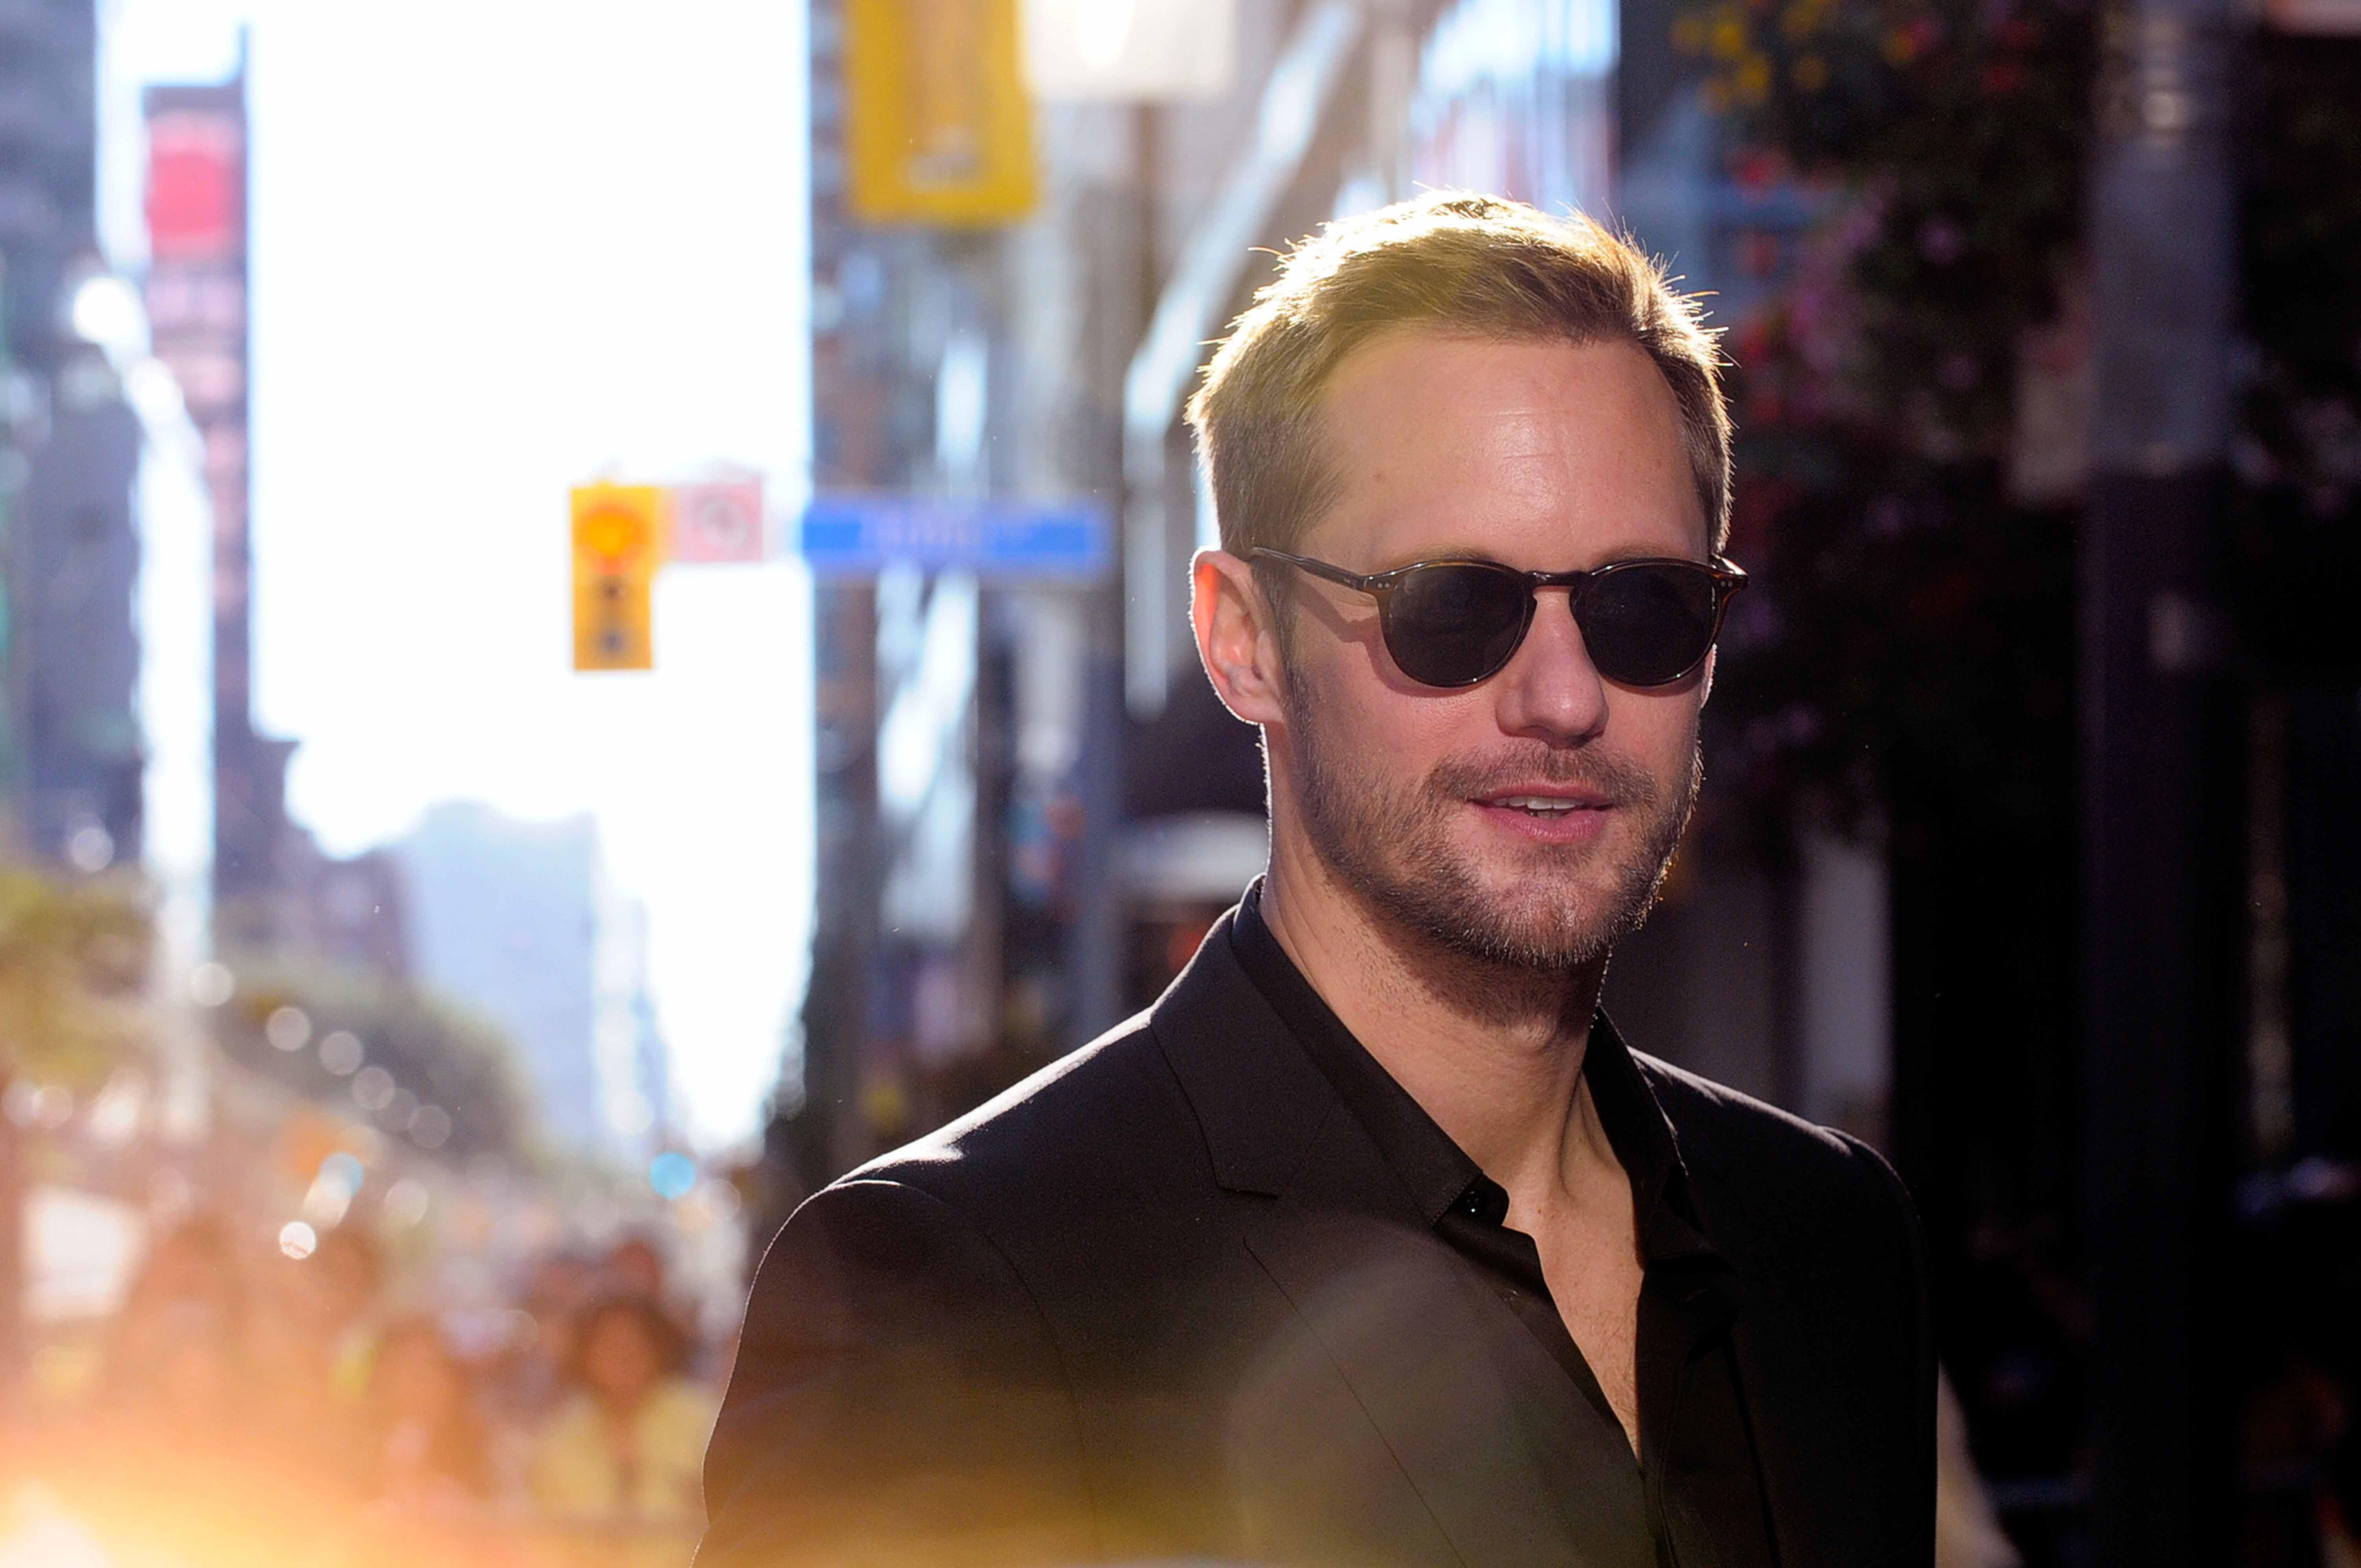 Alexander Skarsgard wearing sunglasses to a film premiere